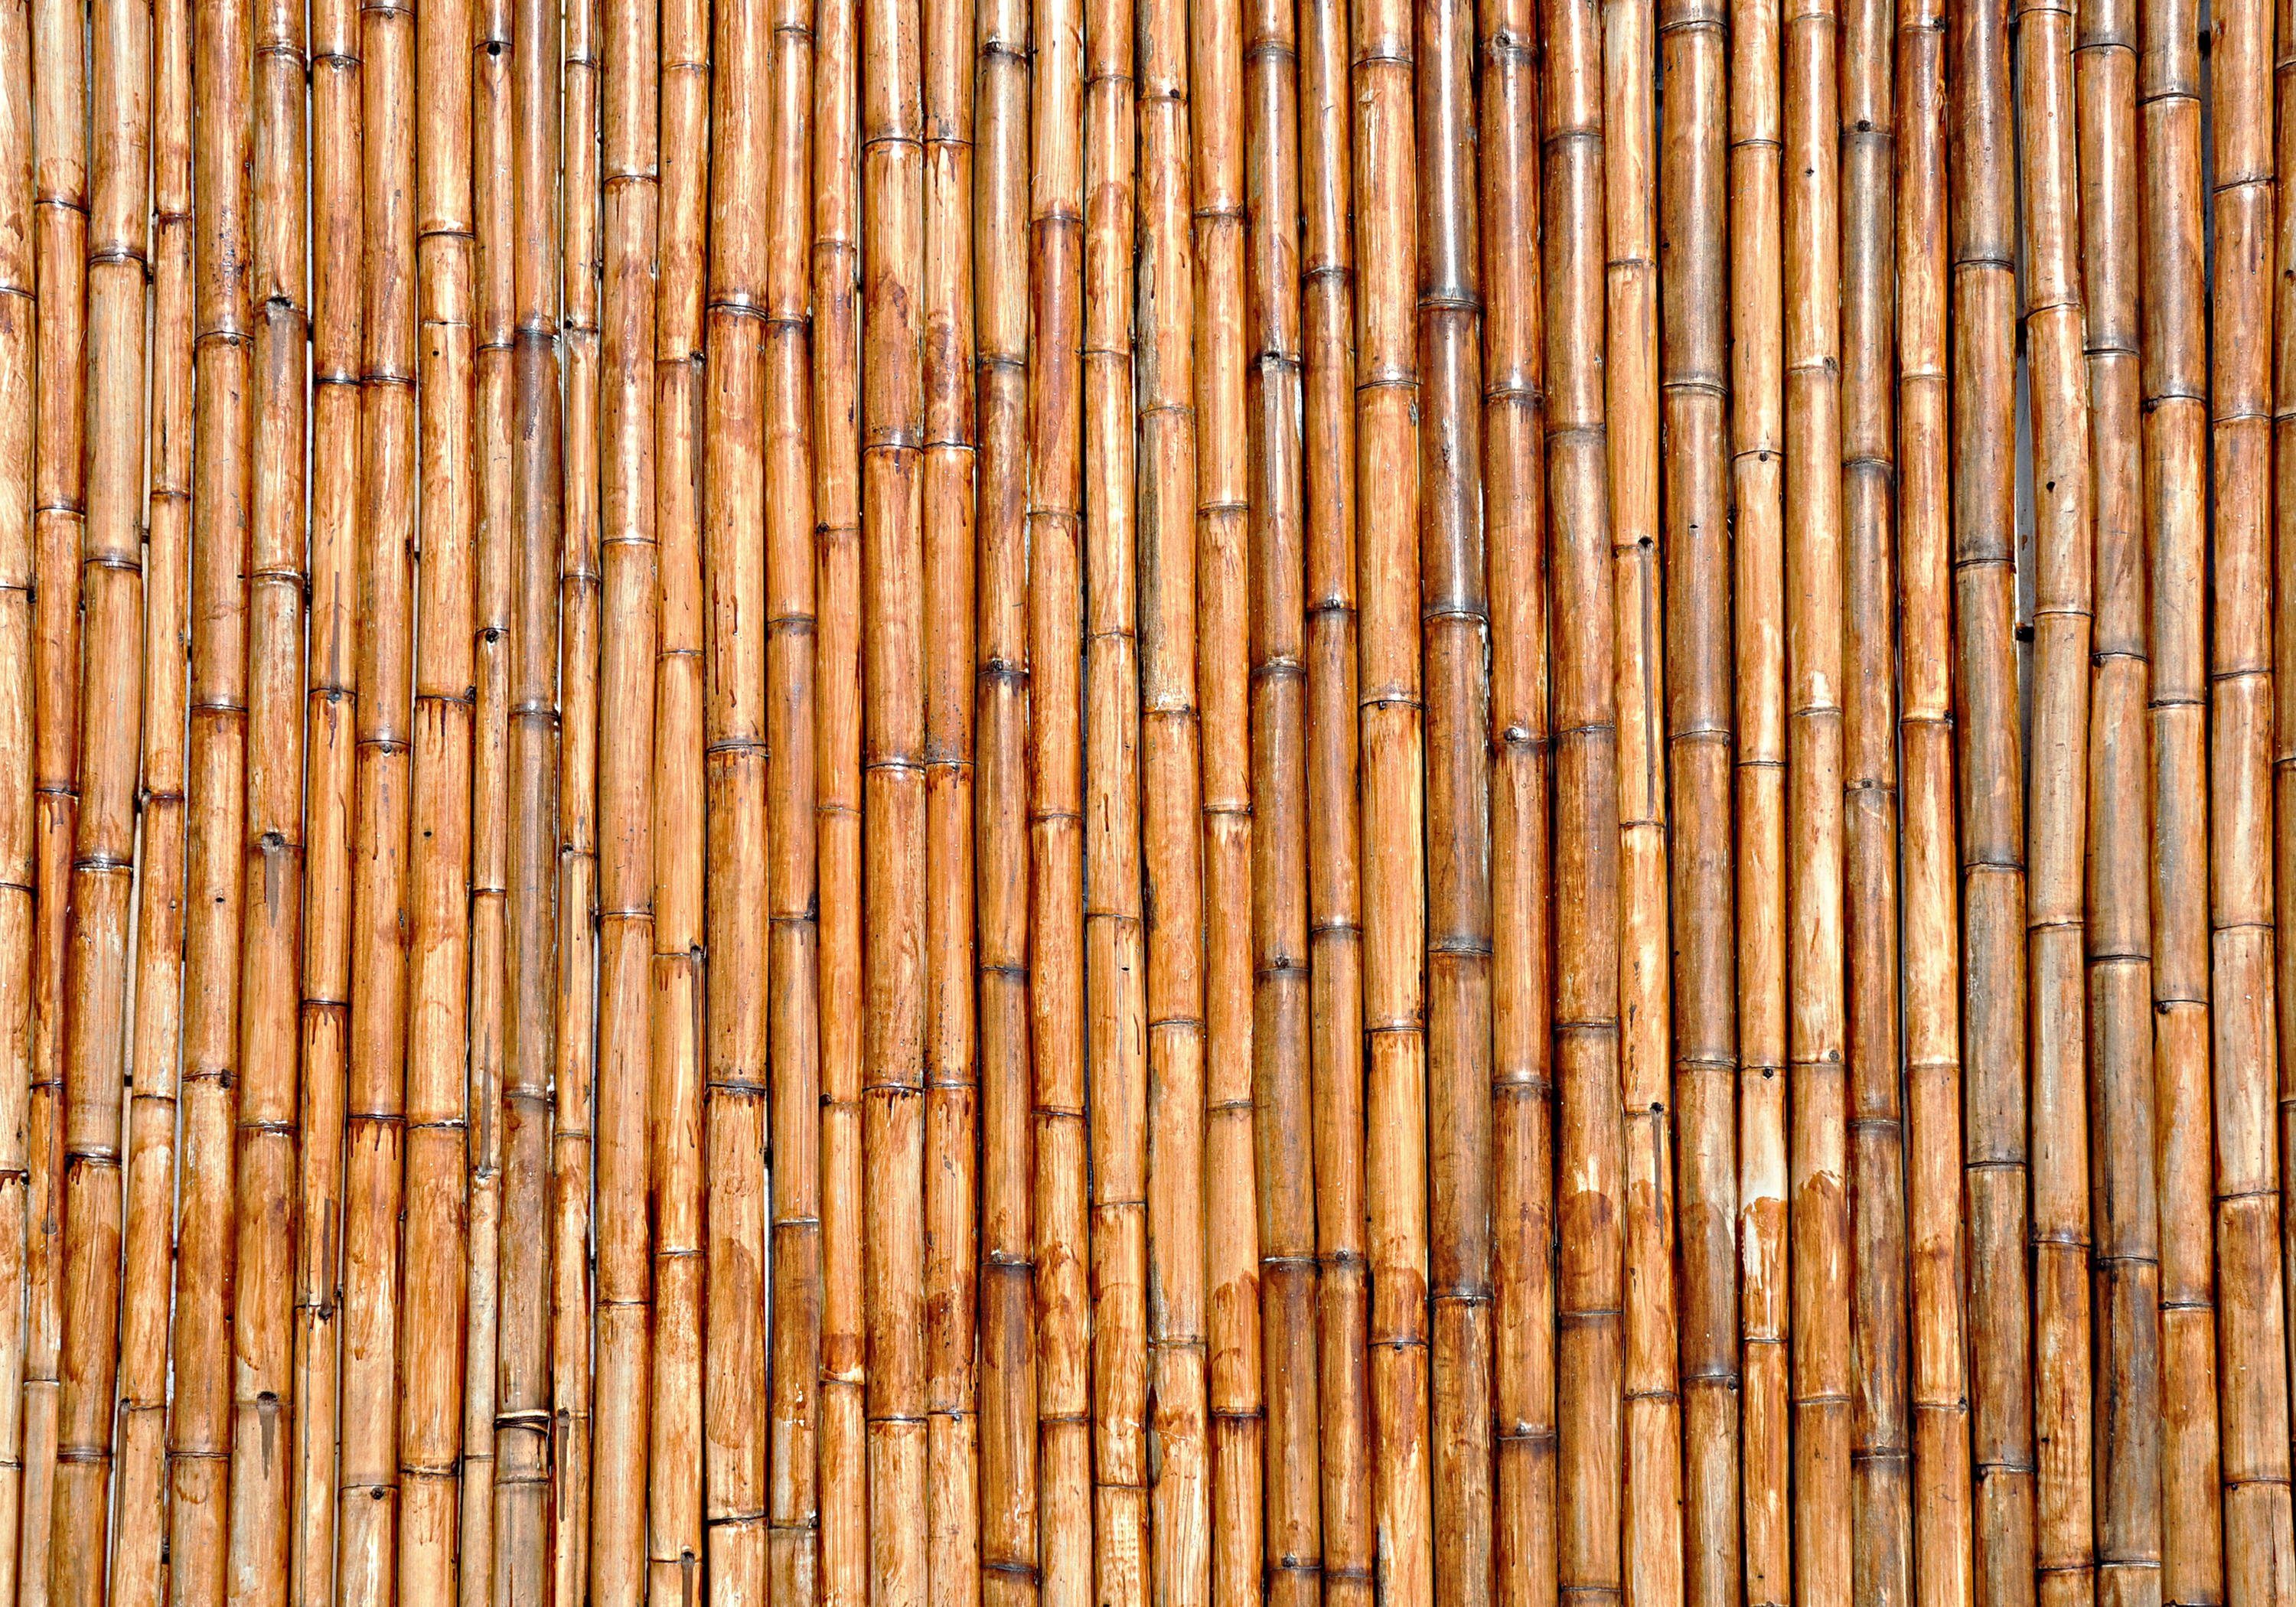 wandmotiv24 Fototapete Bambus Holz Vliestapete Wandtapete, Motivtapete, glatt, Natur, matt